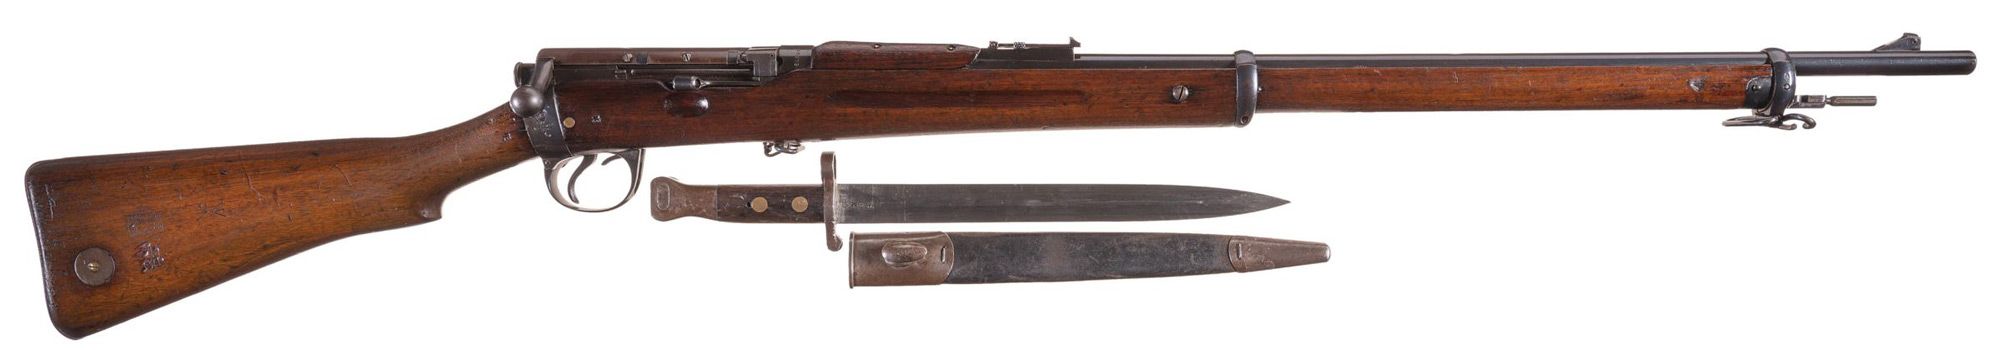 Lee-Metford rifle